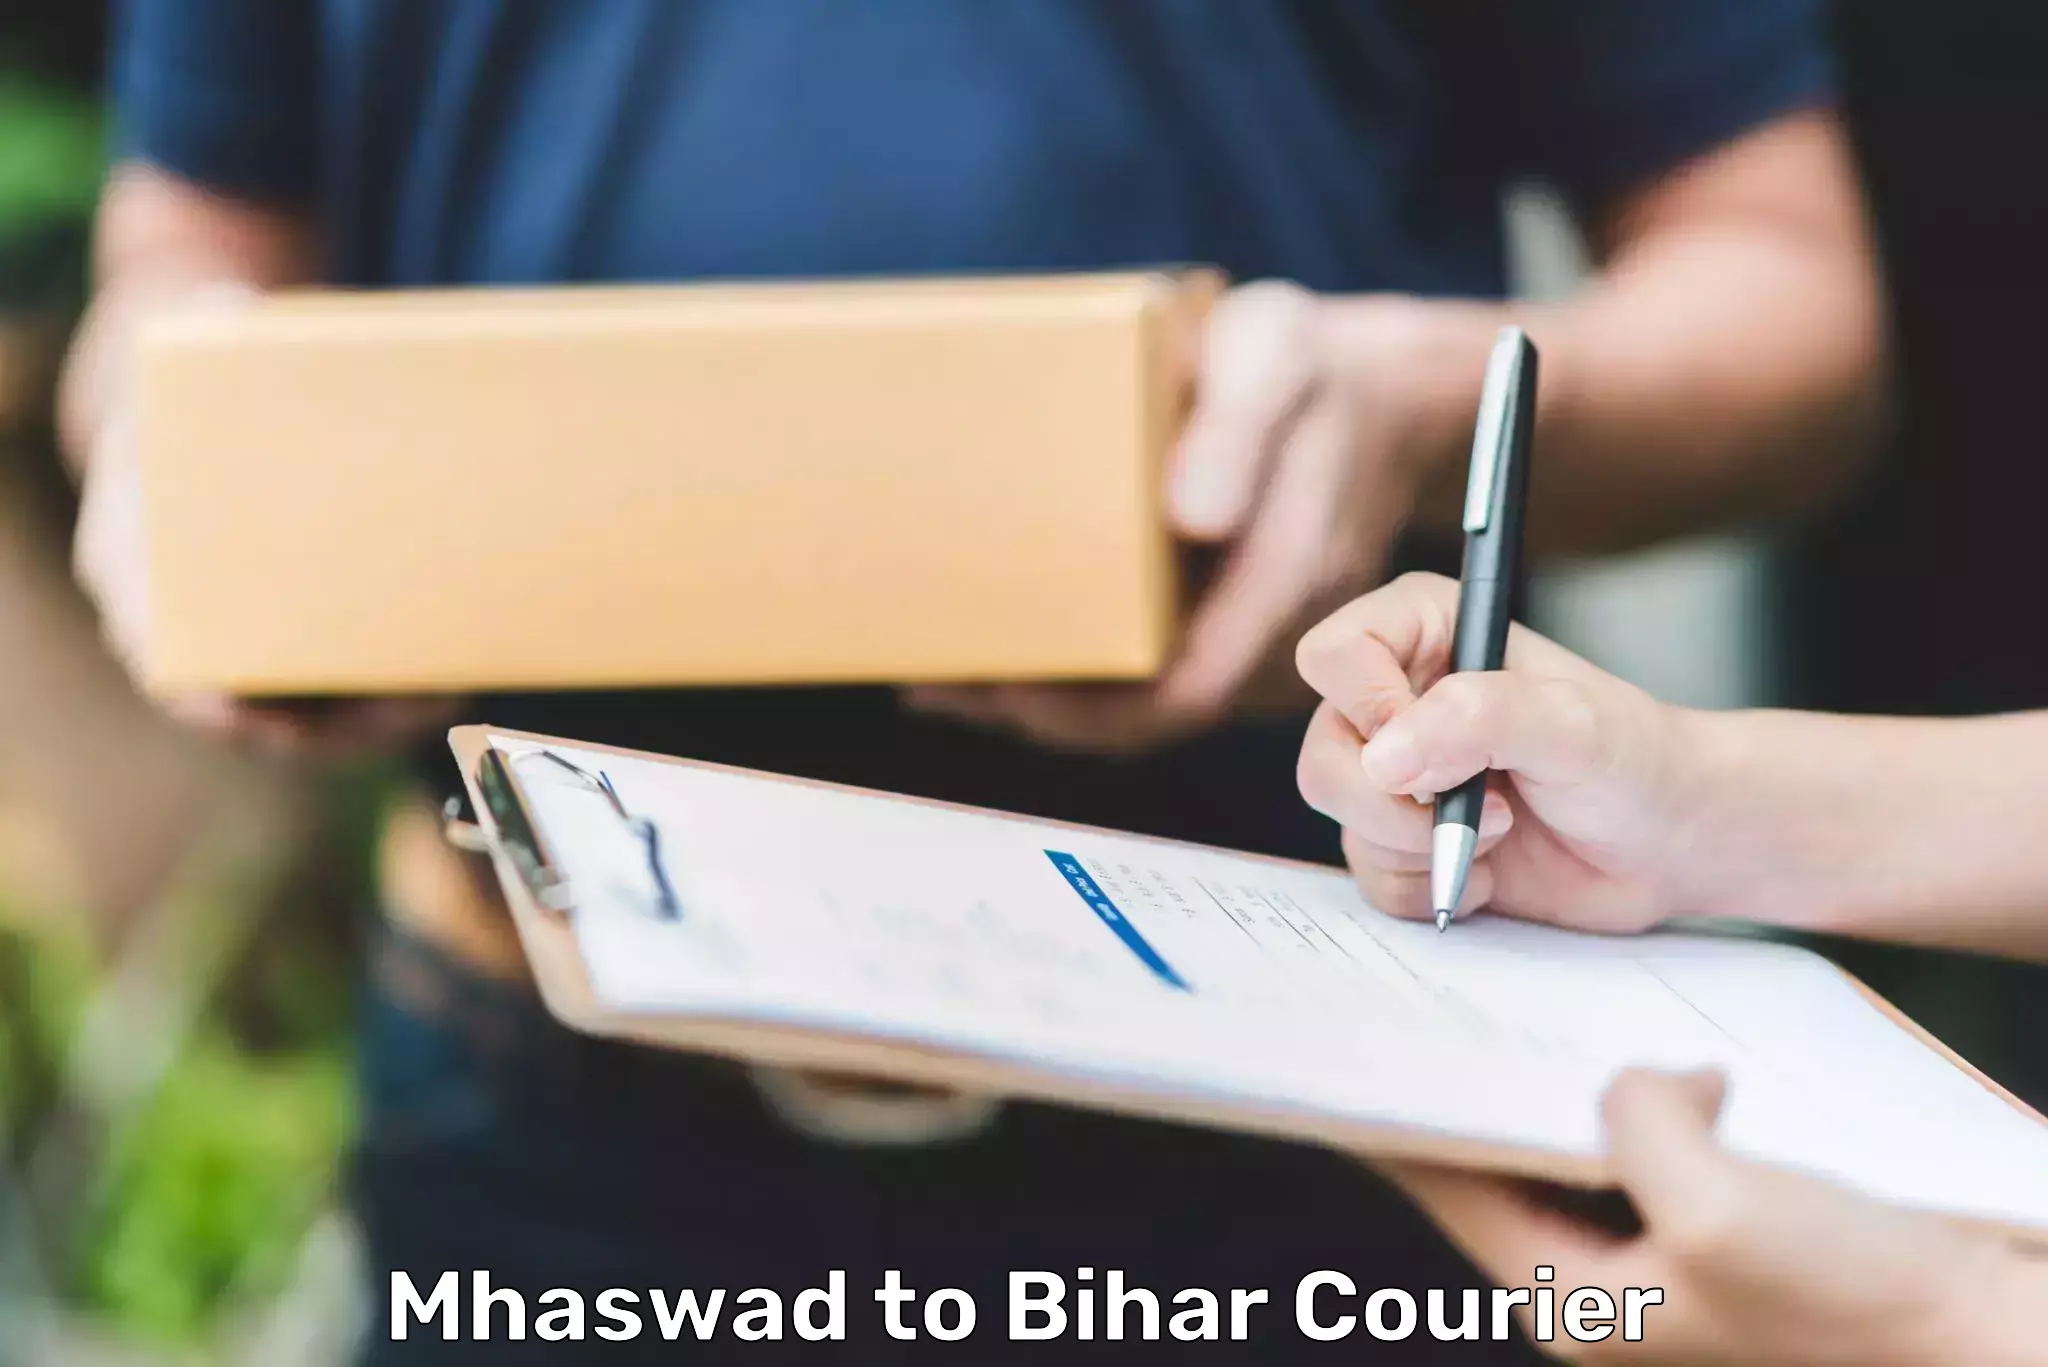 Courier service partnerships Mhaswad to Bihar